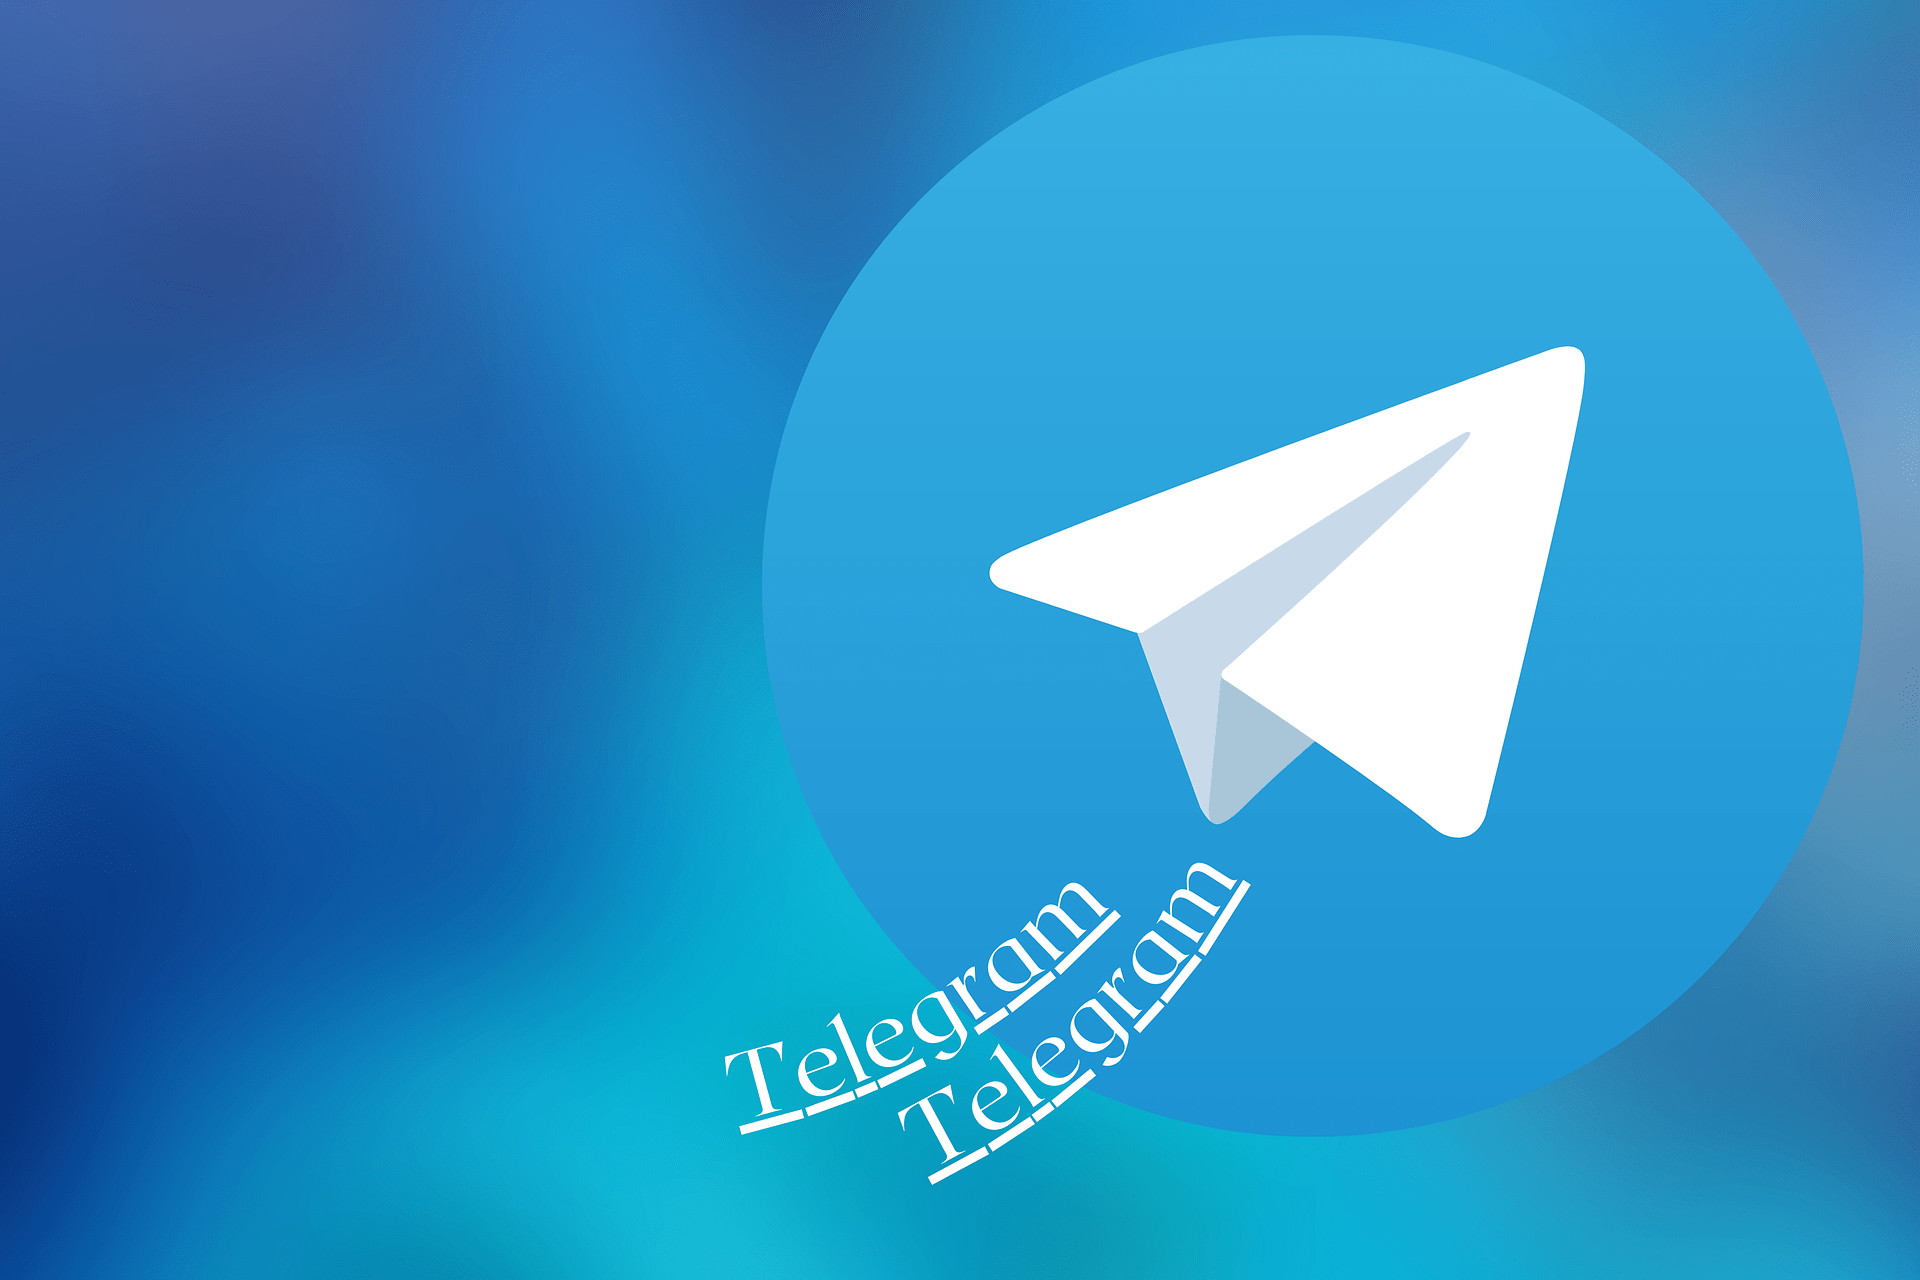 [telegeram无故被注销]telegram为什么会被注销